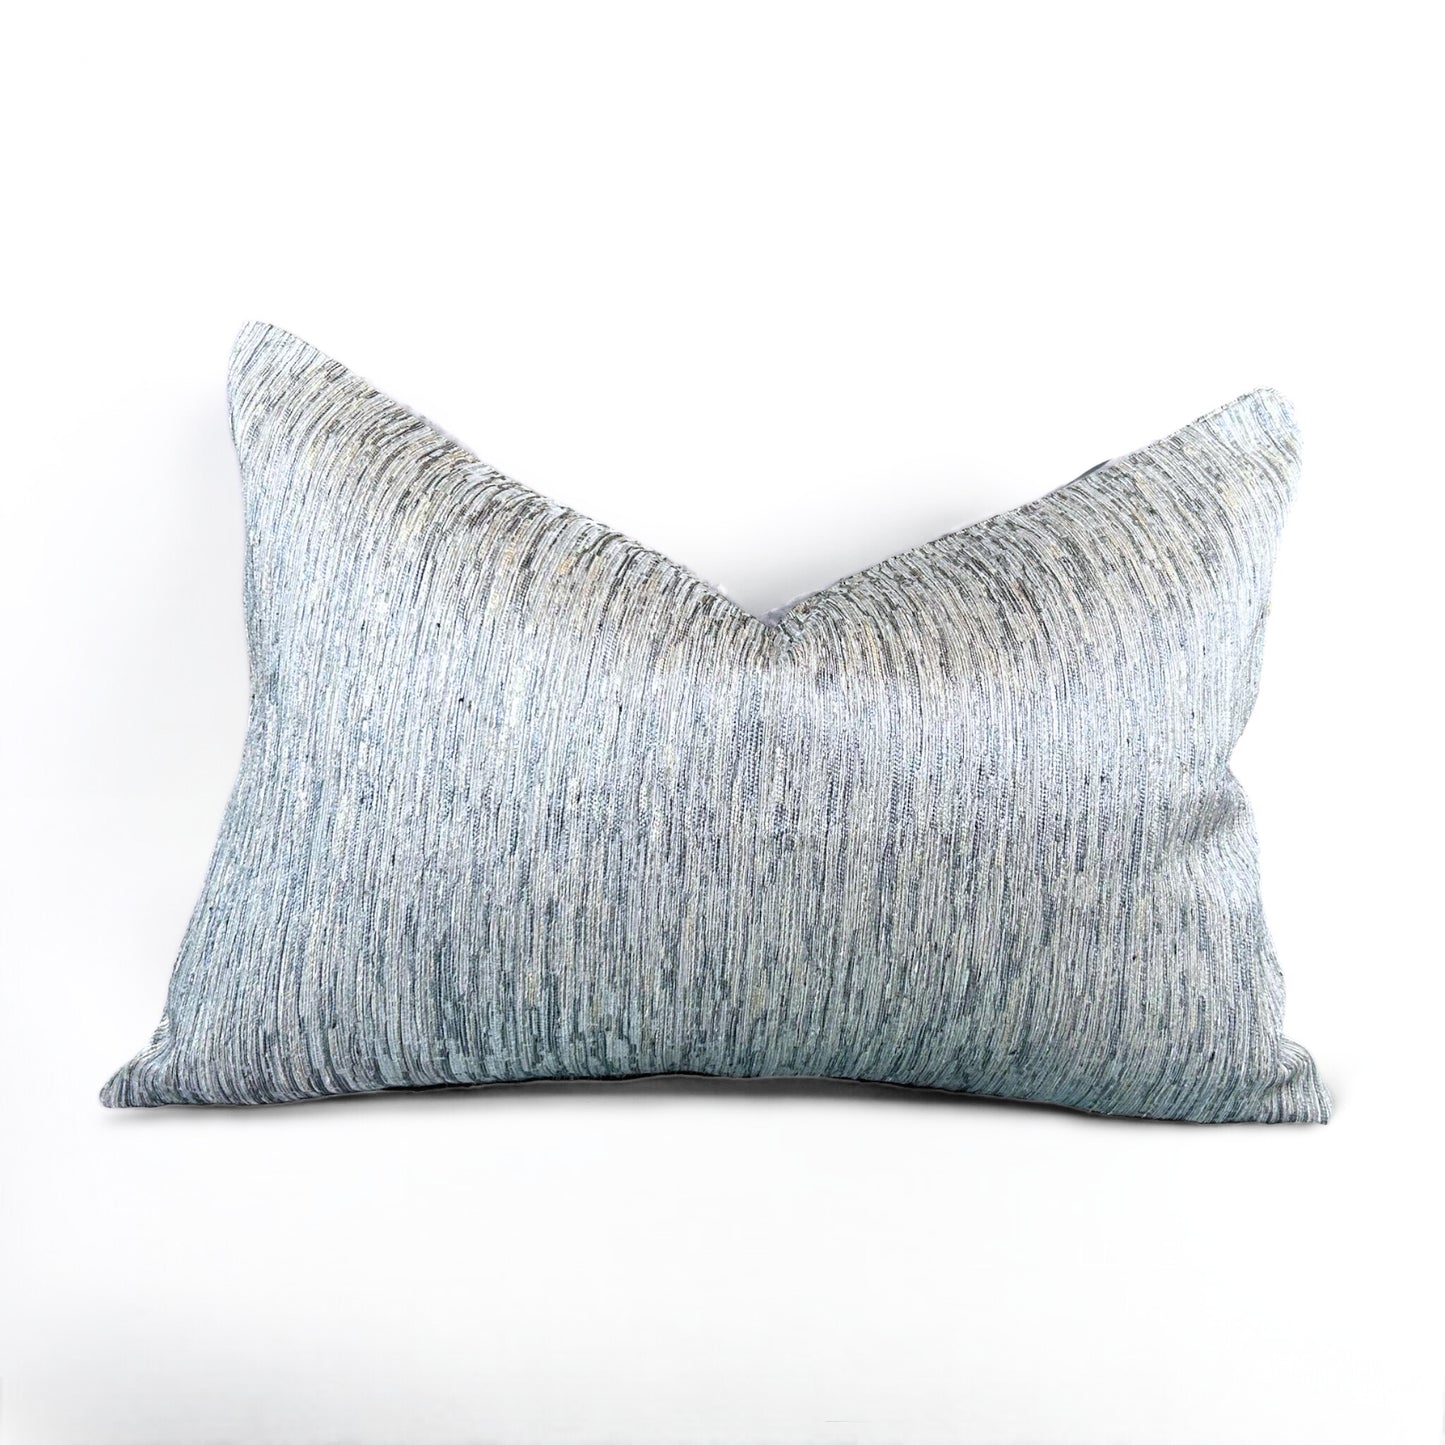 Pale Escapade - Sustainable Décor Pillows